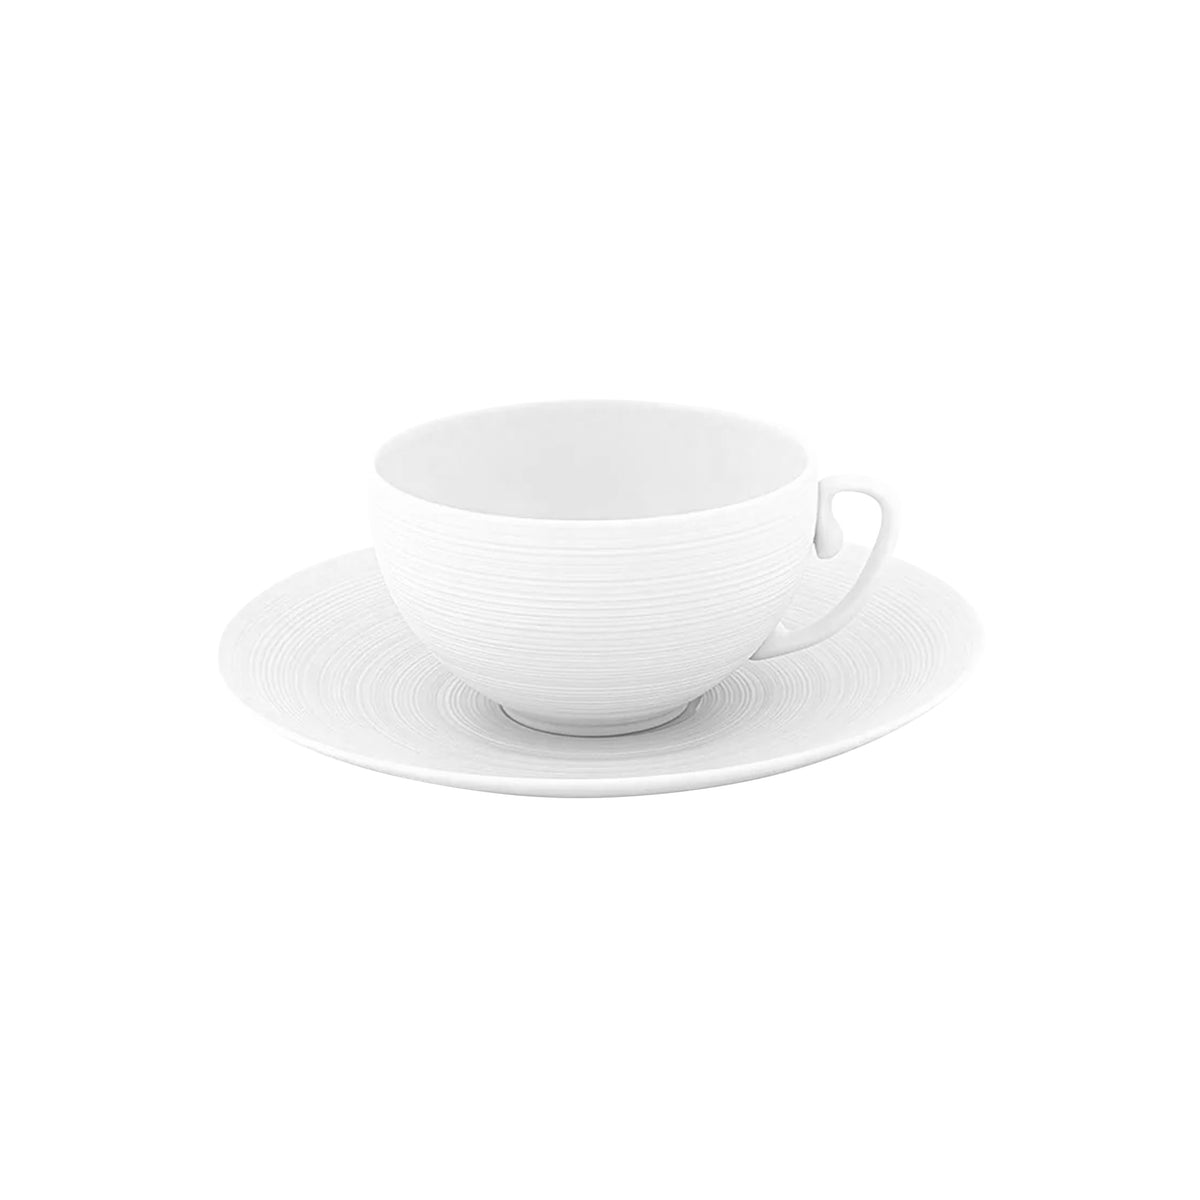 HEMISPHERE Blanc Satiné - Tasse thé & soucoupe